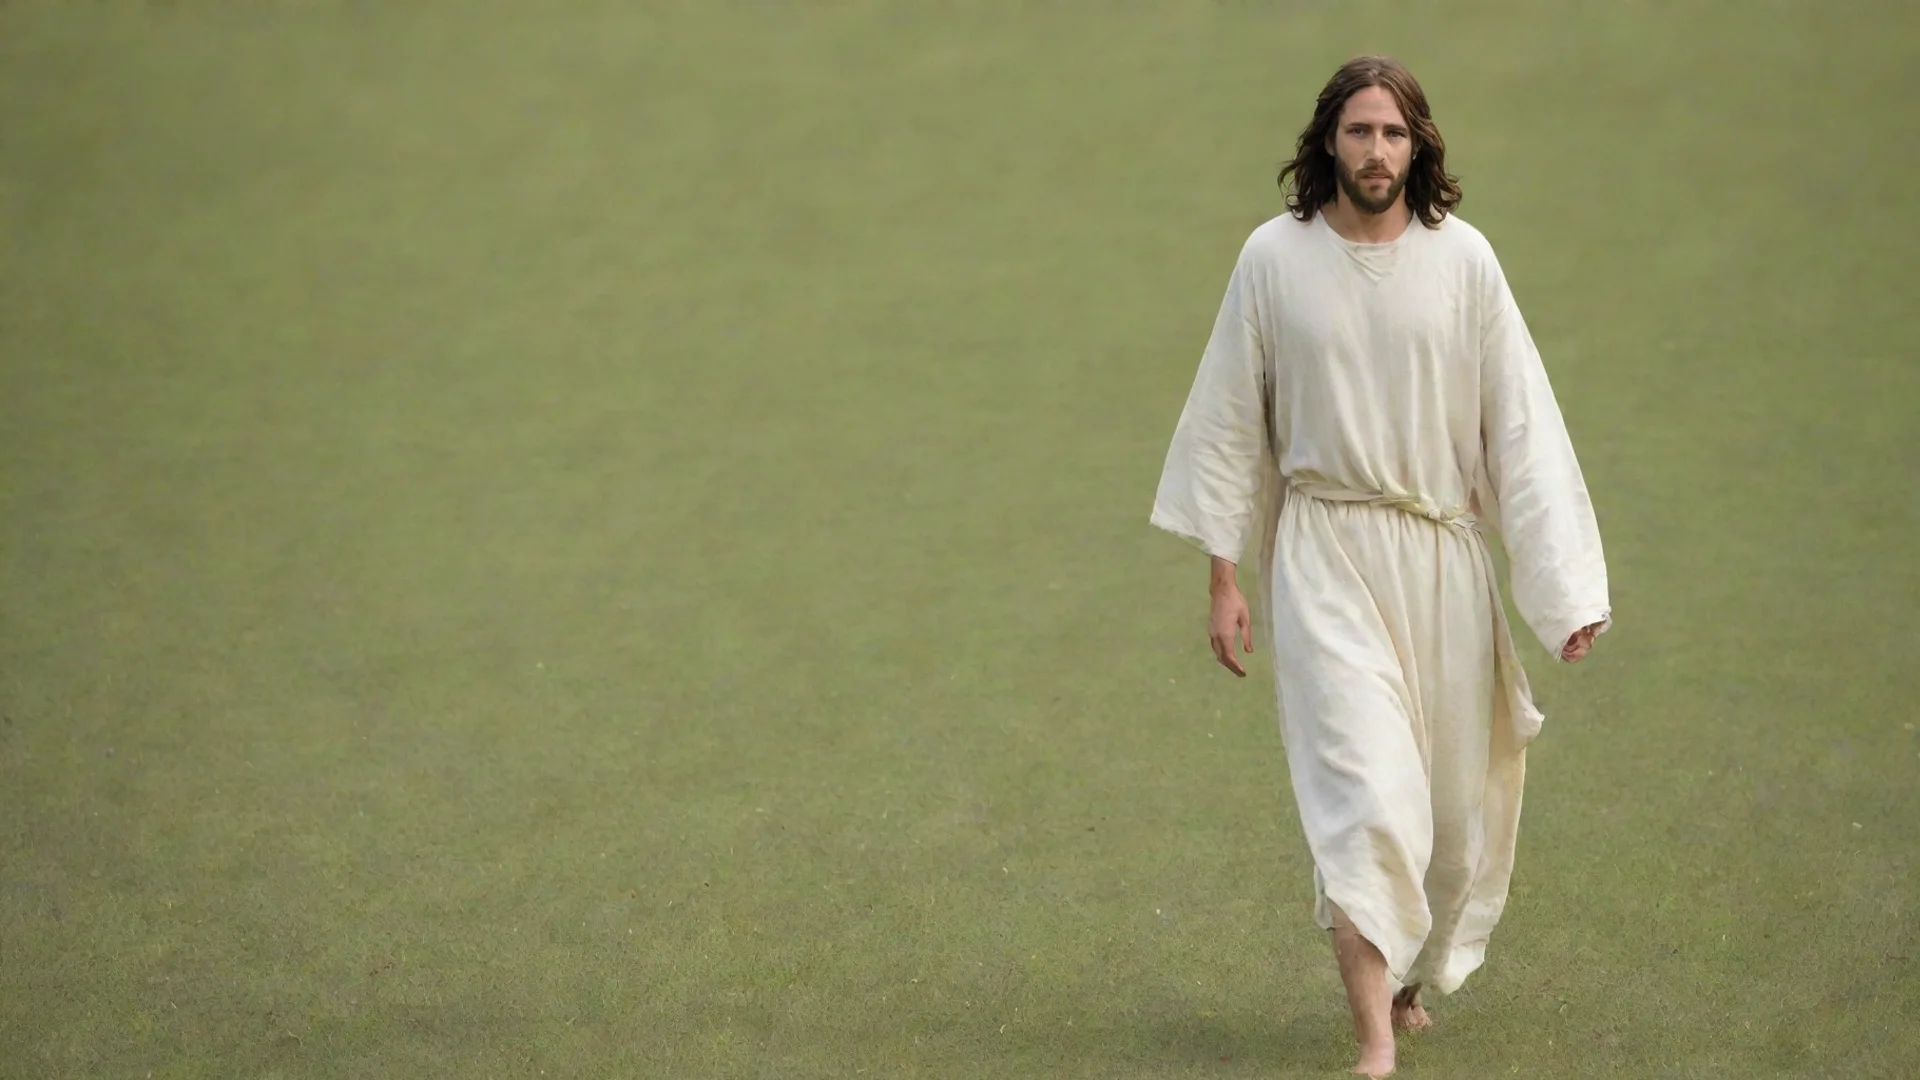 aitrending jesus walking on field good looking fantastic 1 wide